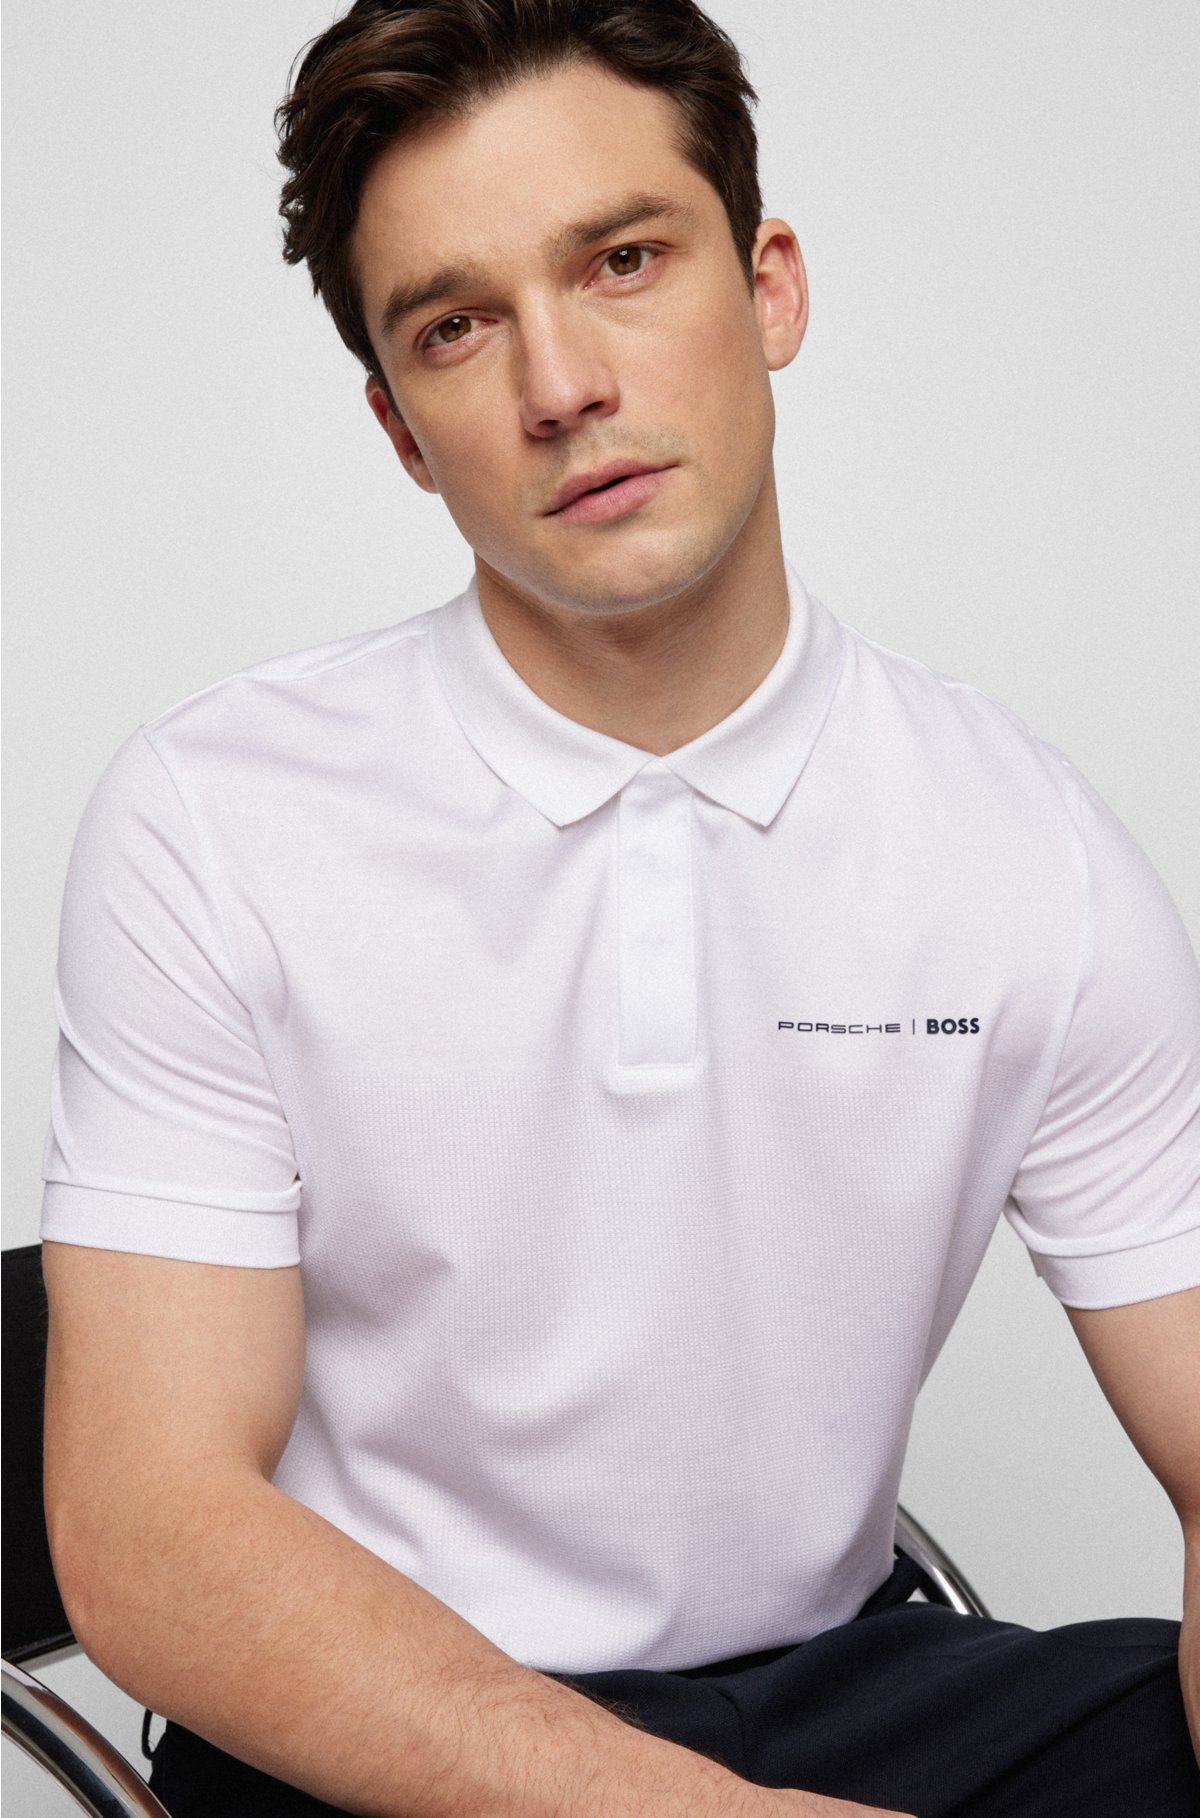 Porsche x BOSS slim-fit T-shirt with exclusive branding